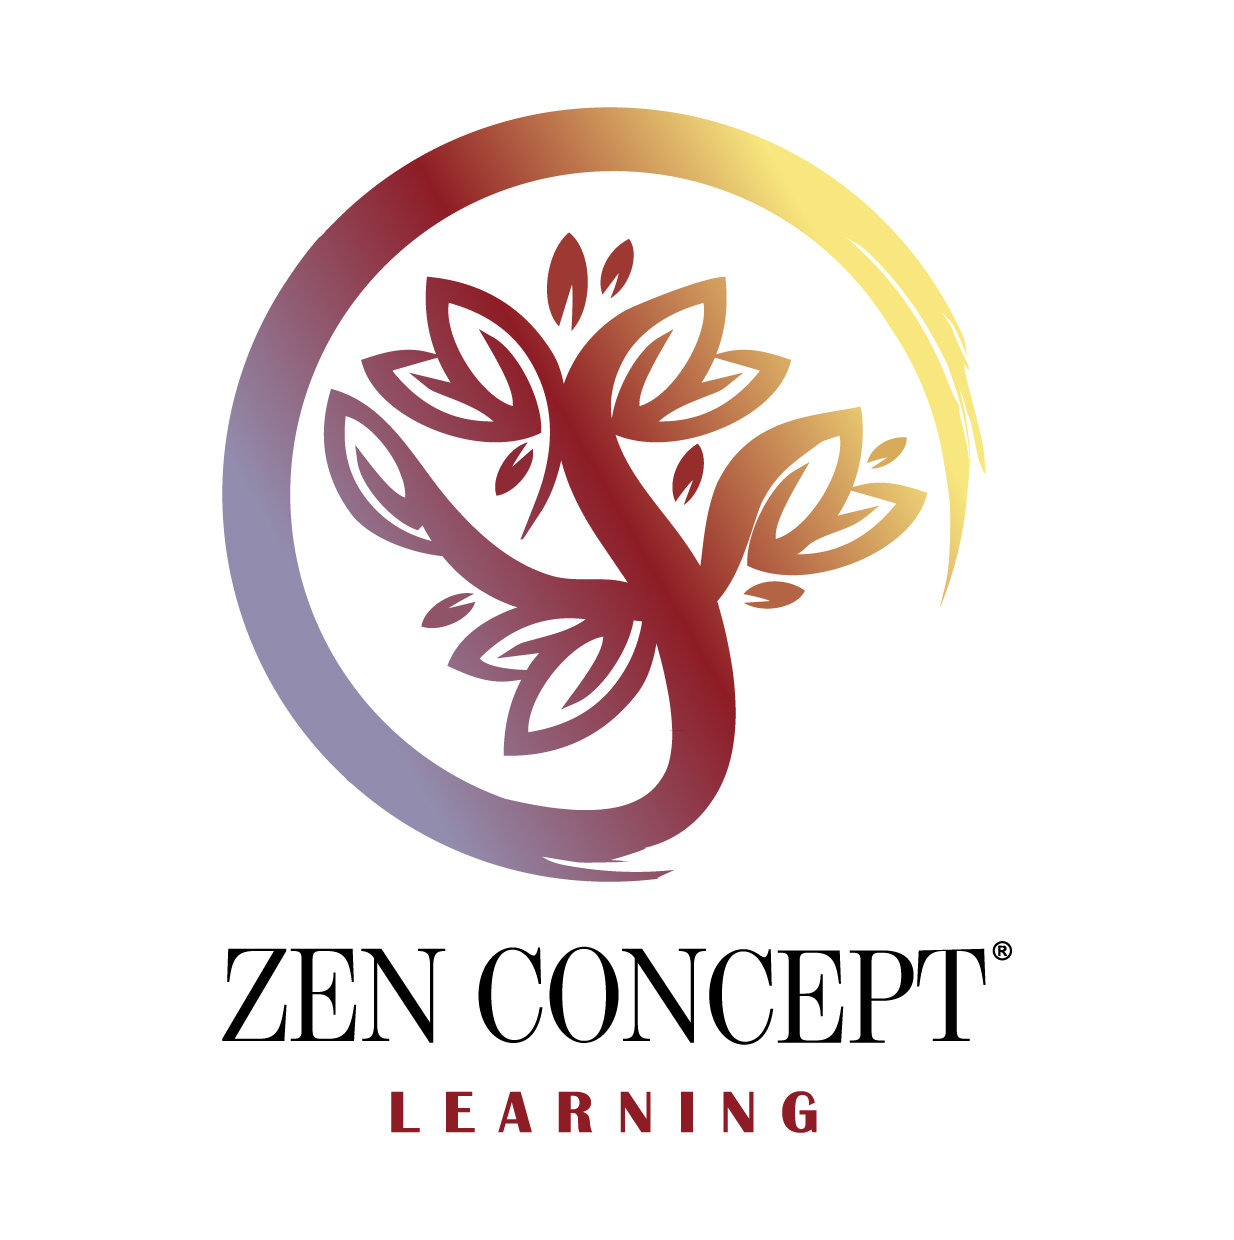 Zen Concept Learning